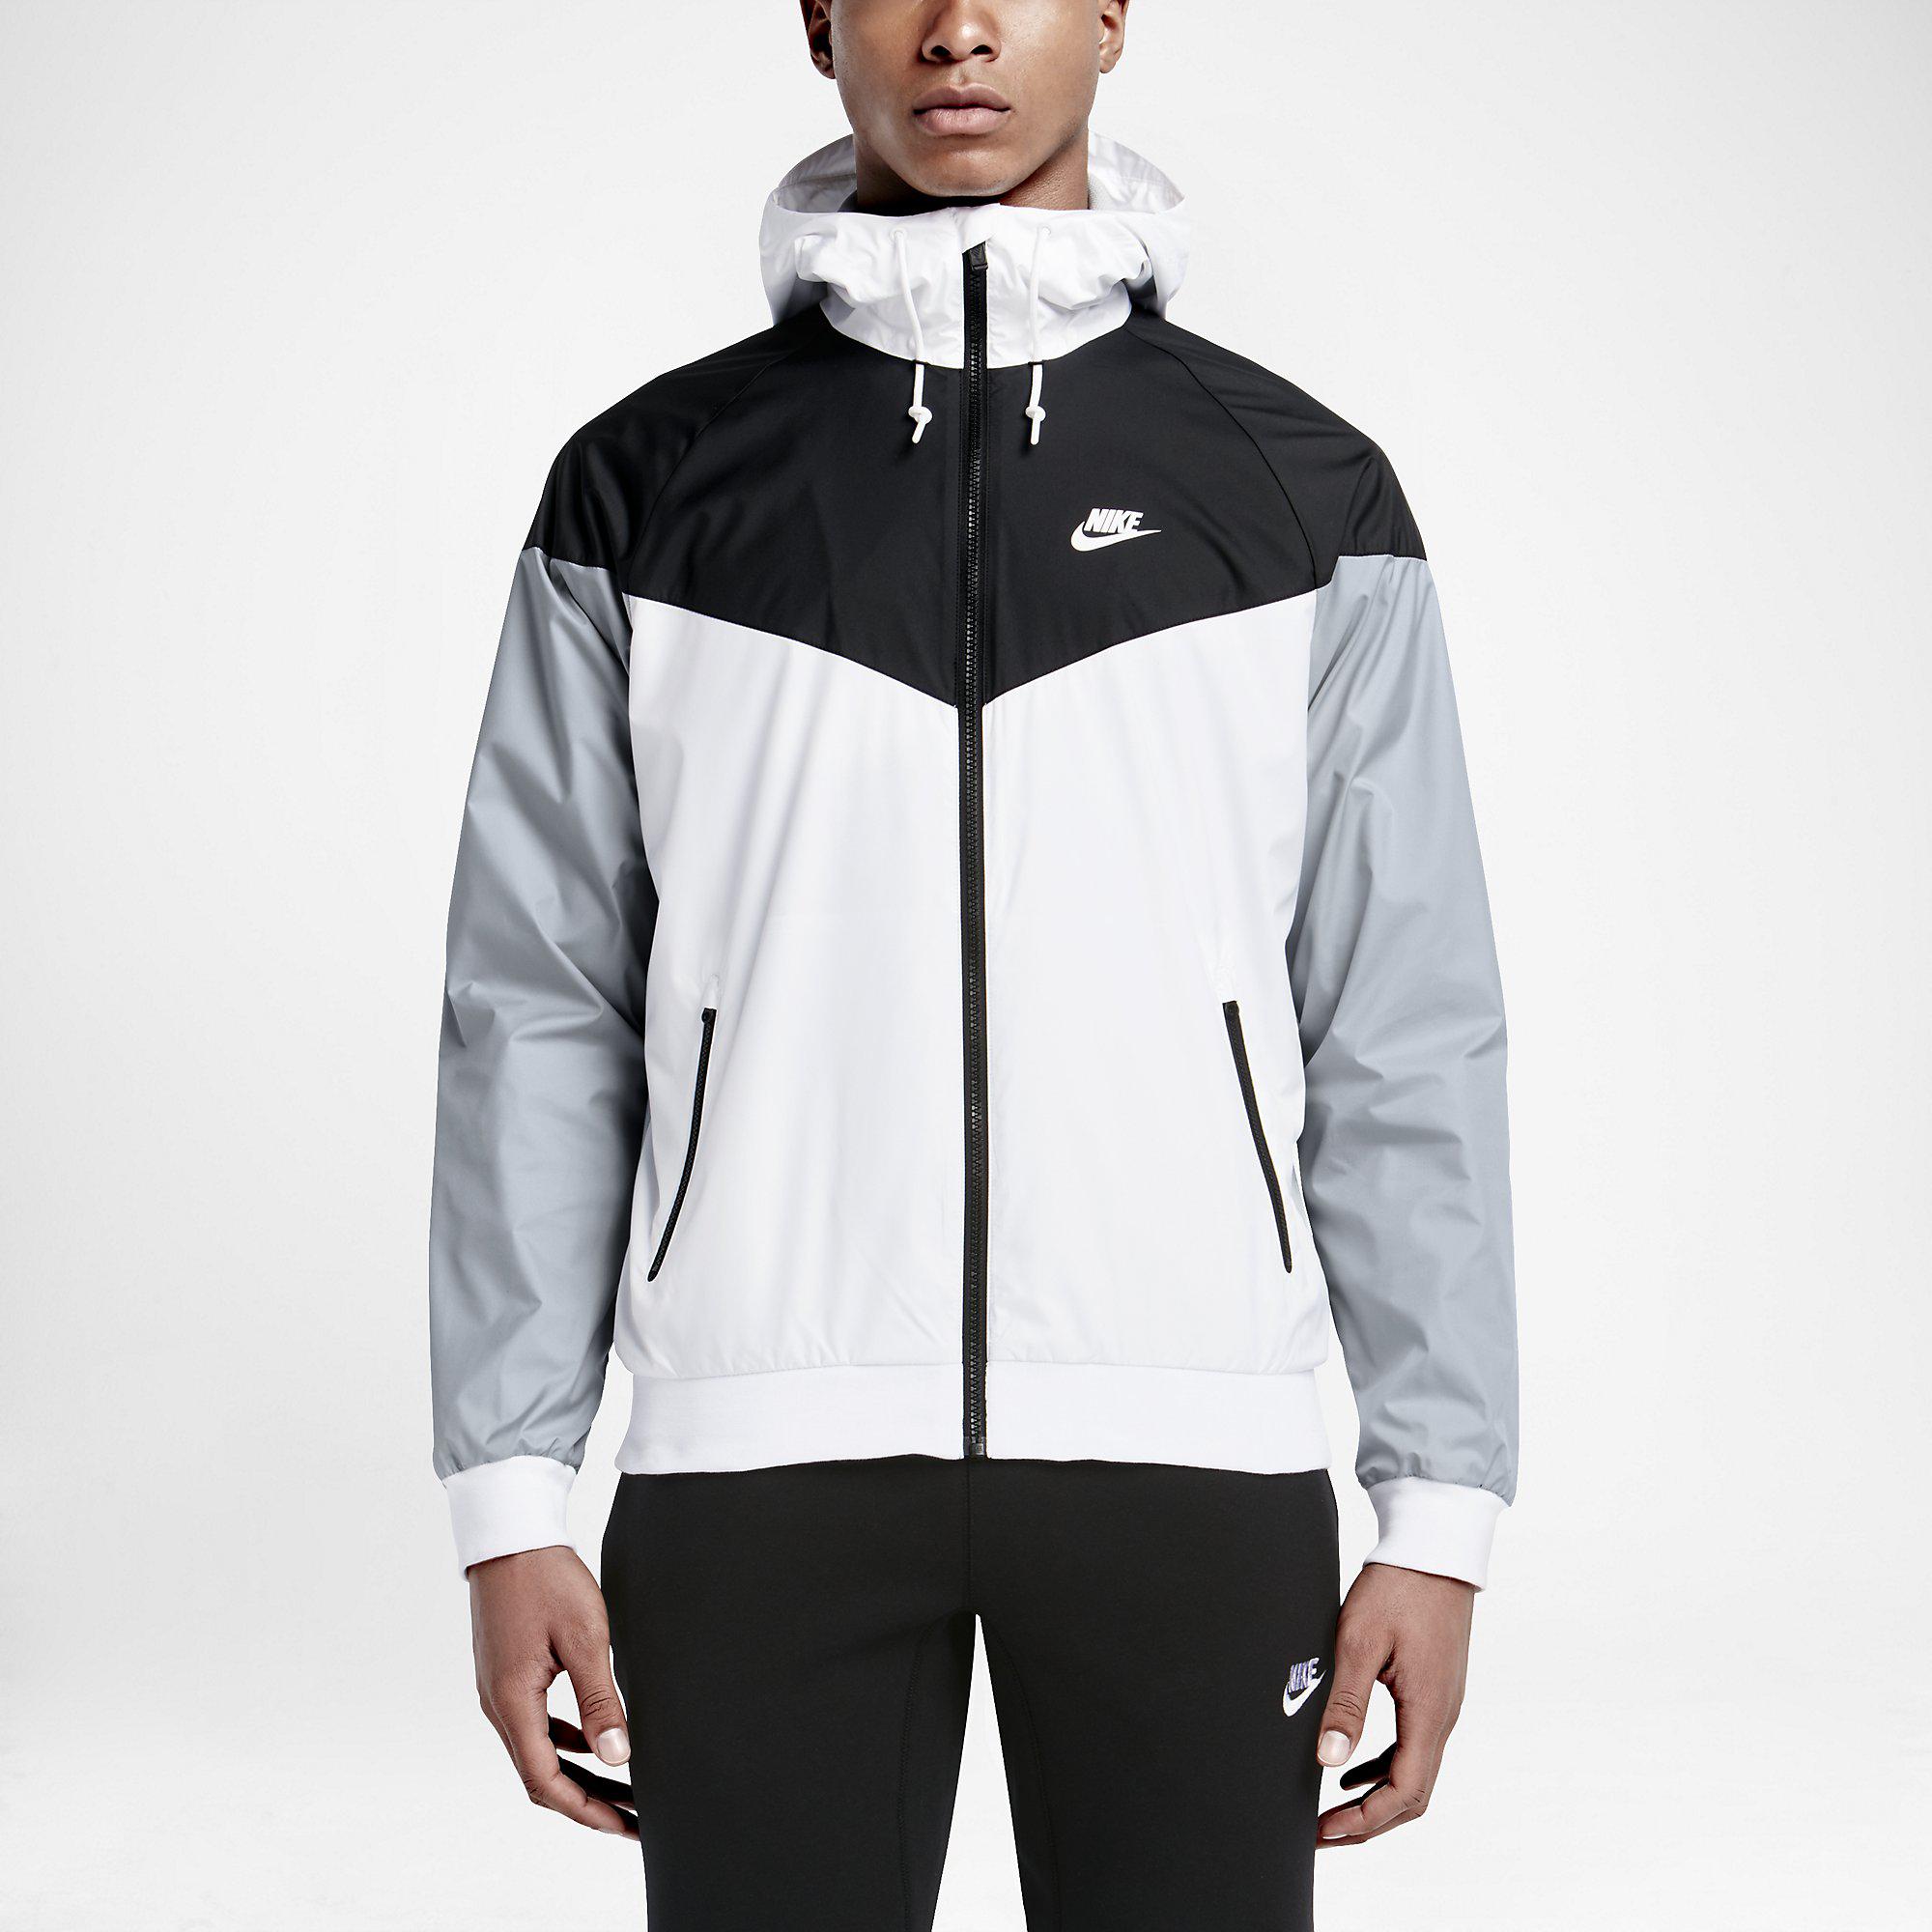 Nike windrunner jacket sale